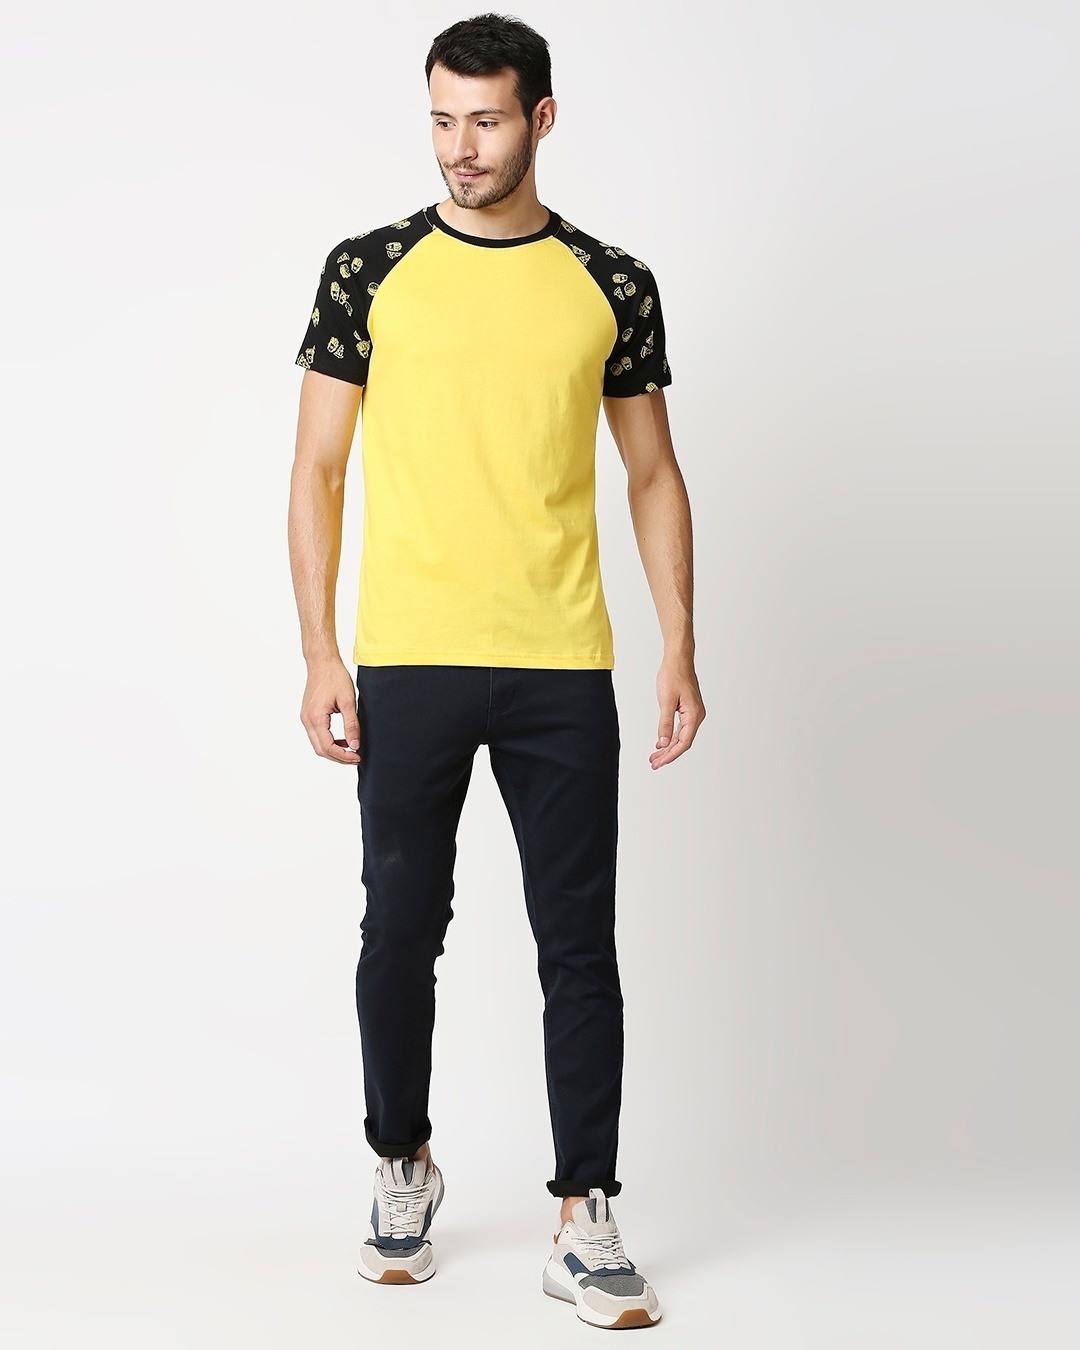 Shop Yolo Yellow AOP Half Sleeve Raglan T-Shirt